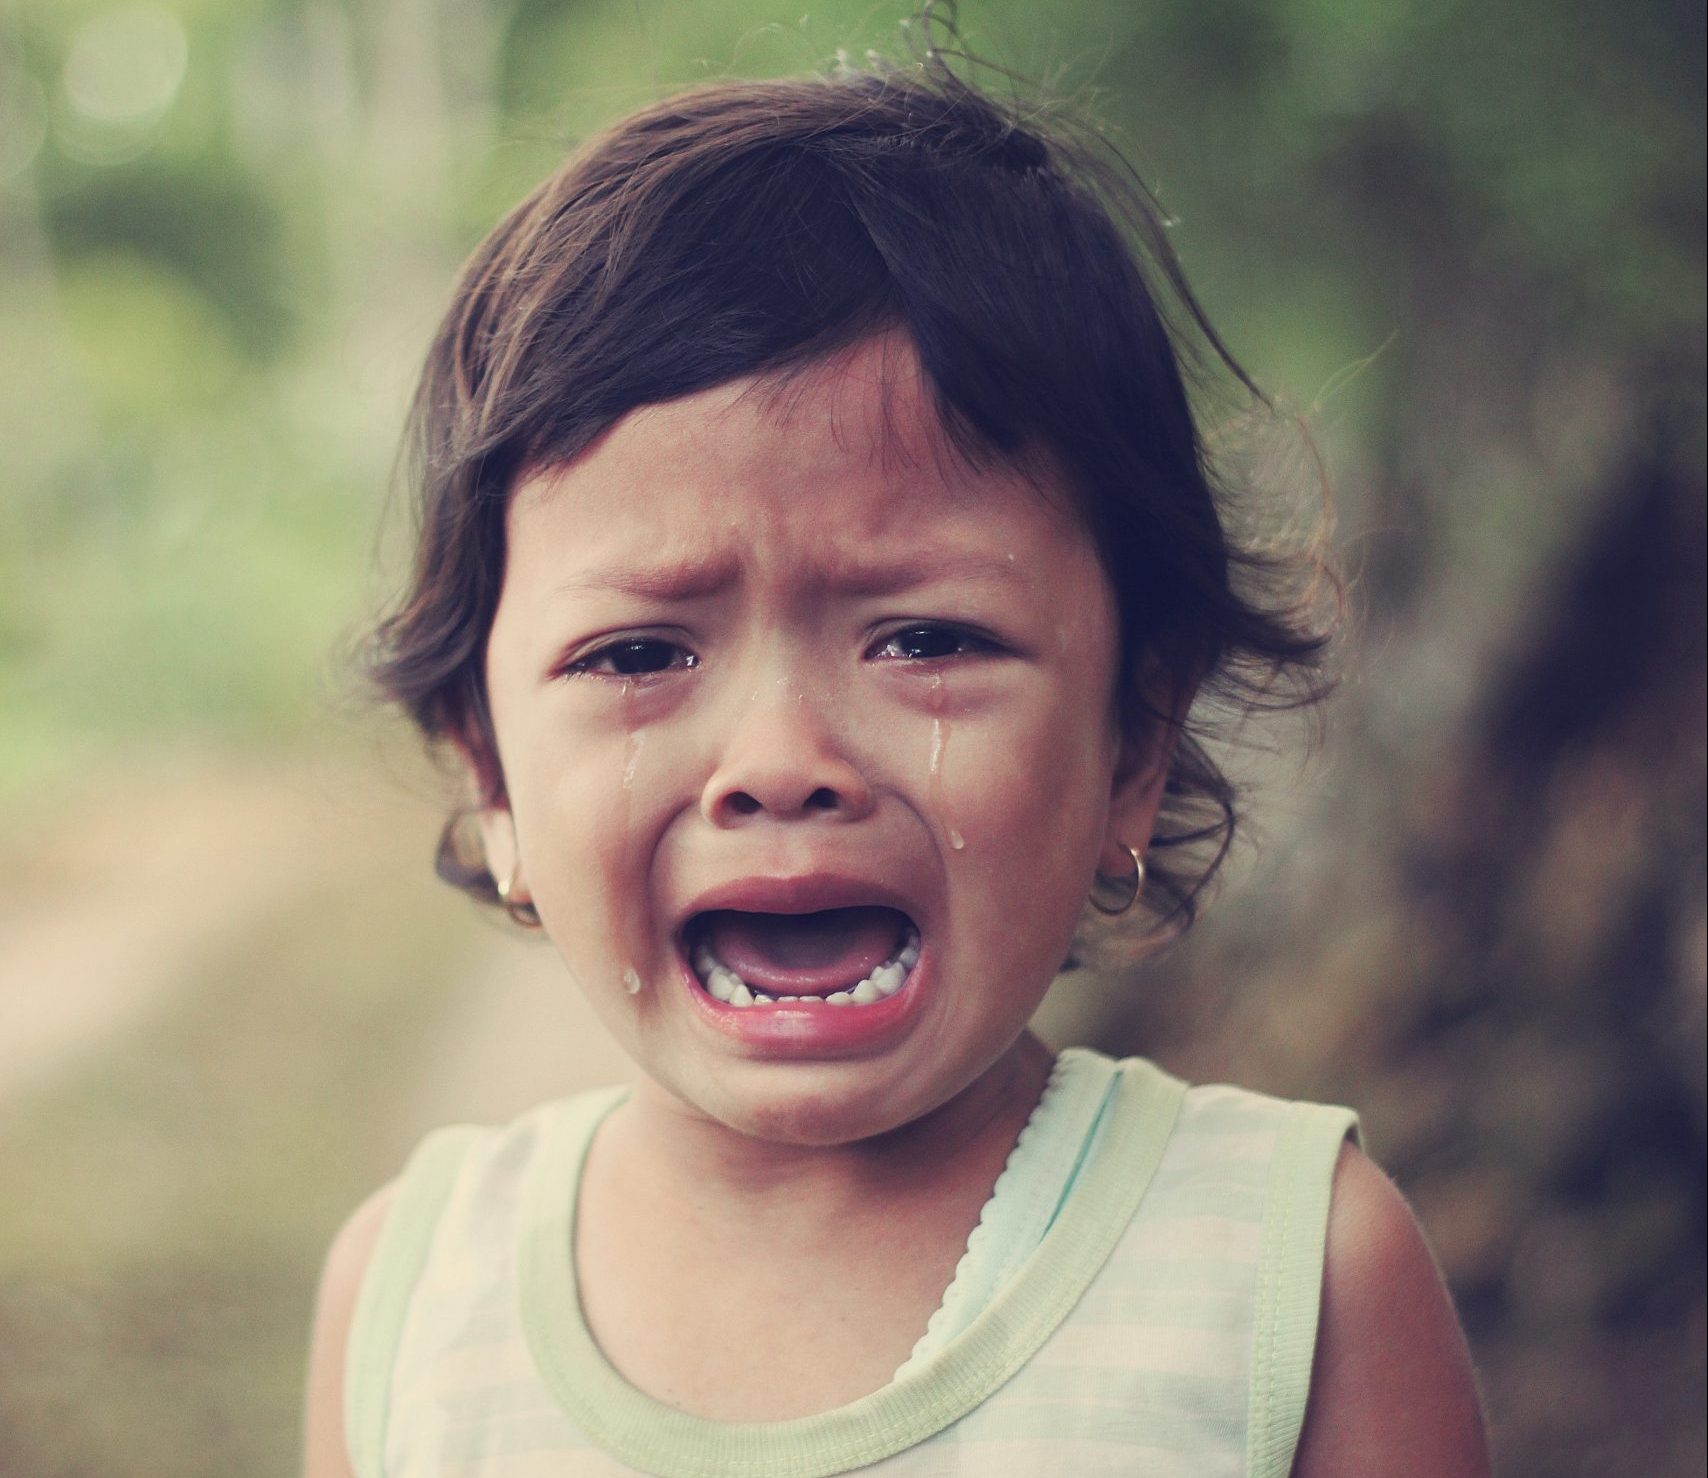 Temper tantrums in toddlers